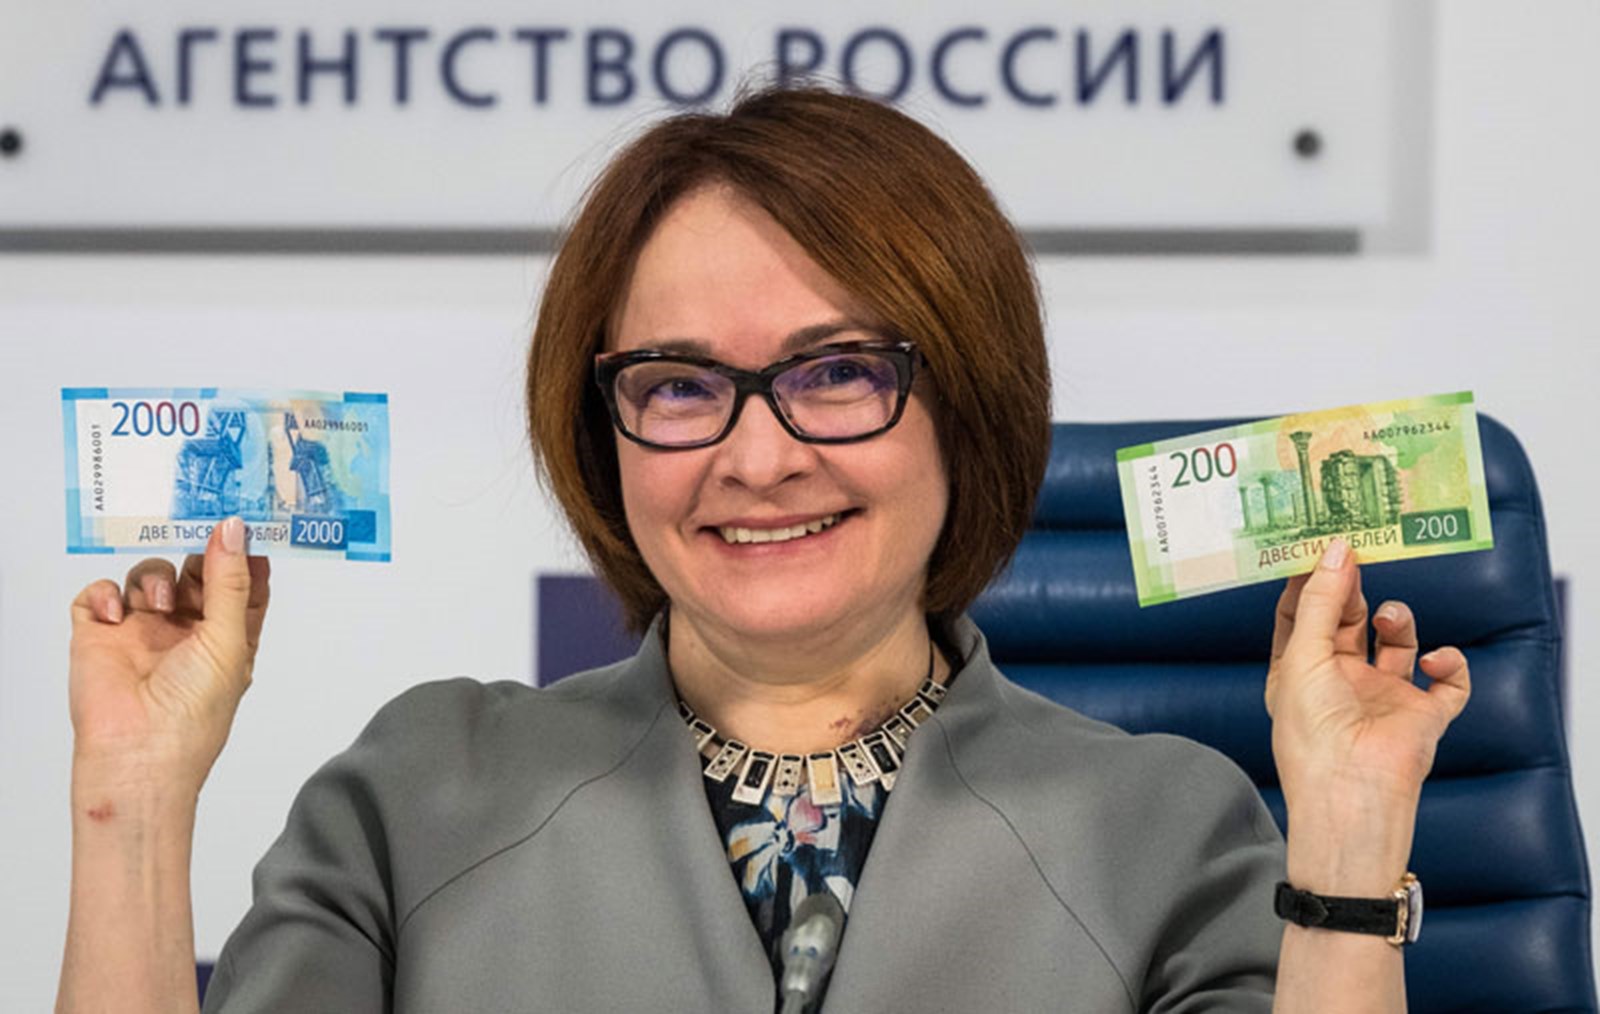 Rusko vydalo nové bankovky, ktoré Ukrajina zakázala.